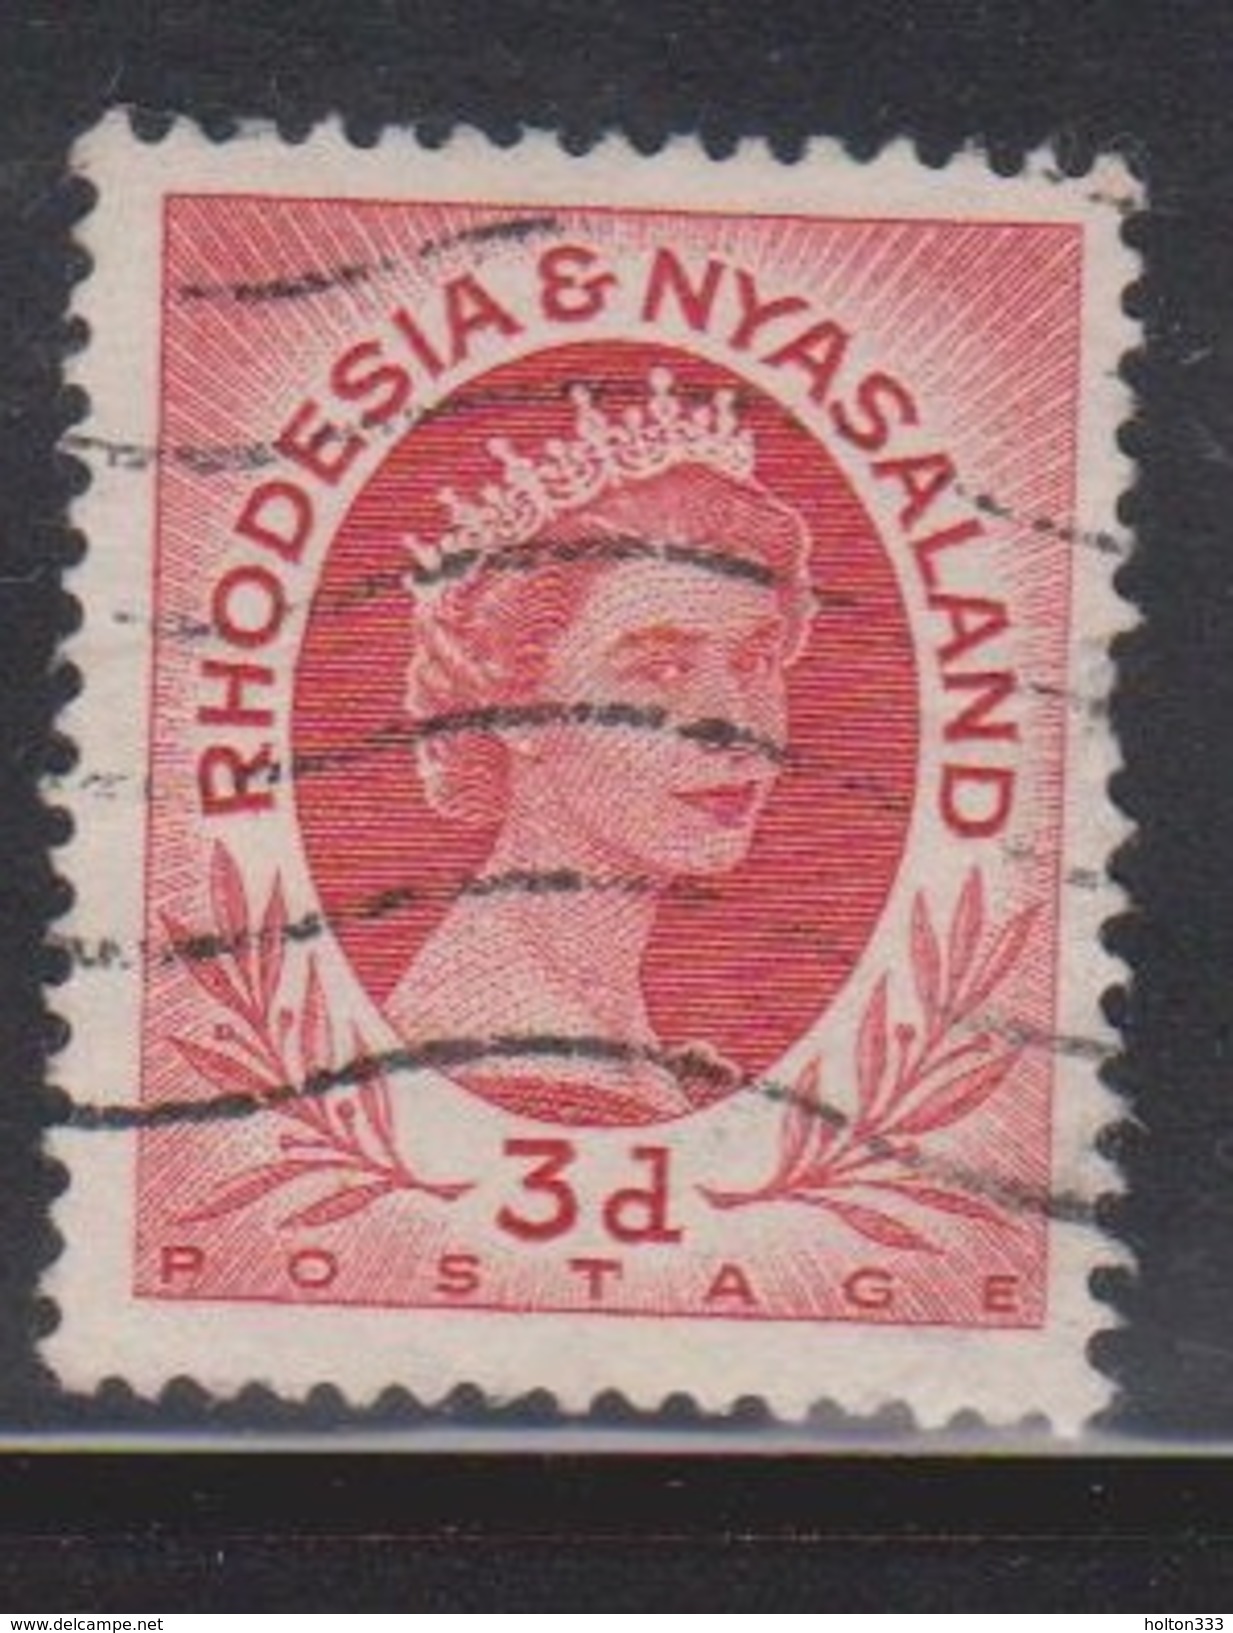 RHODESIA & NYASSALAND Scott # 144 Used - Rhodesia & Nyasaland (1954-1963)